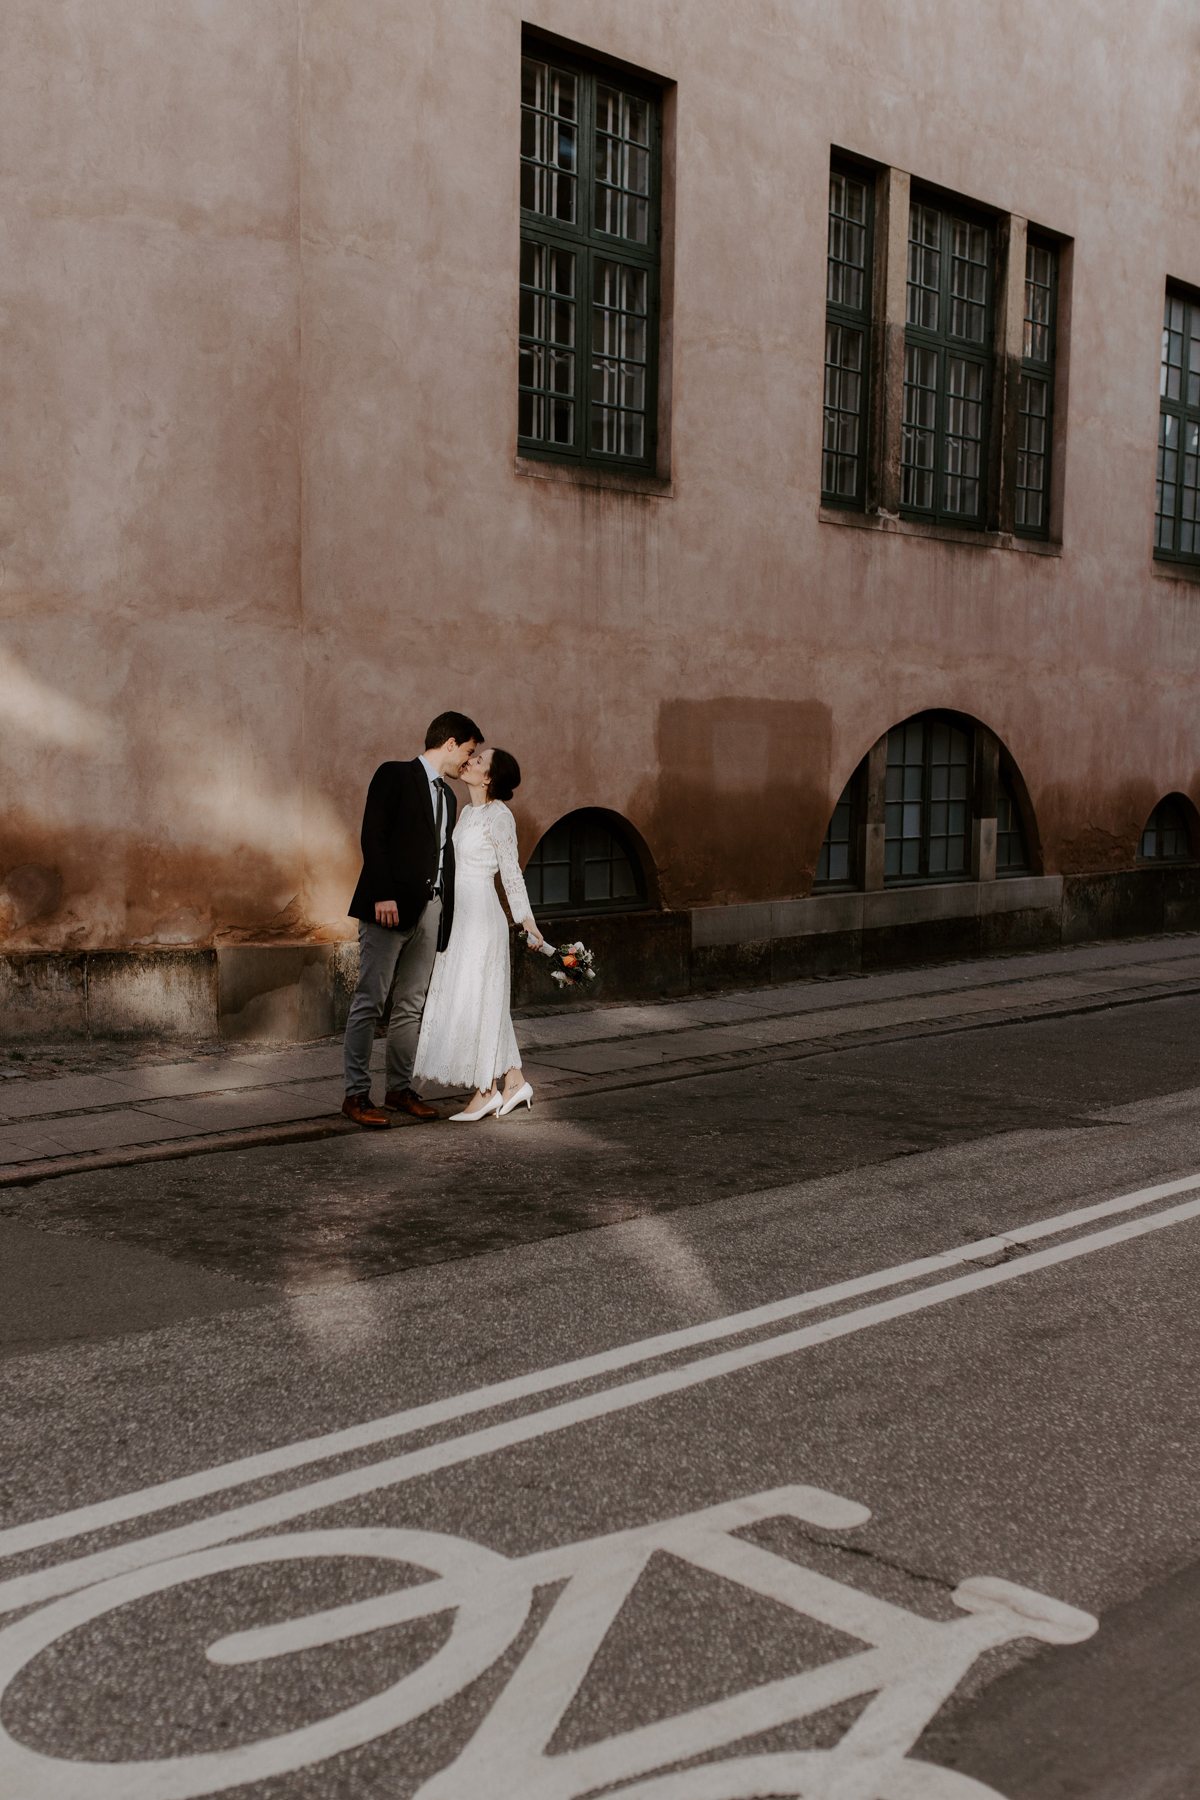 Our Dreamy Copenhagen Elopement ~ City Hall Wedding Photographer, Elva Ziemele / Lace Ivy and Oak Wedding Dress, Denmark / RG Daily Blog, Rebecca Goddard